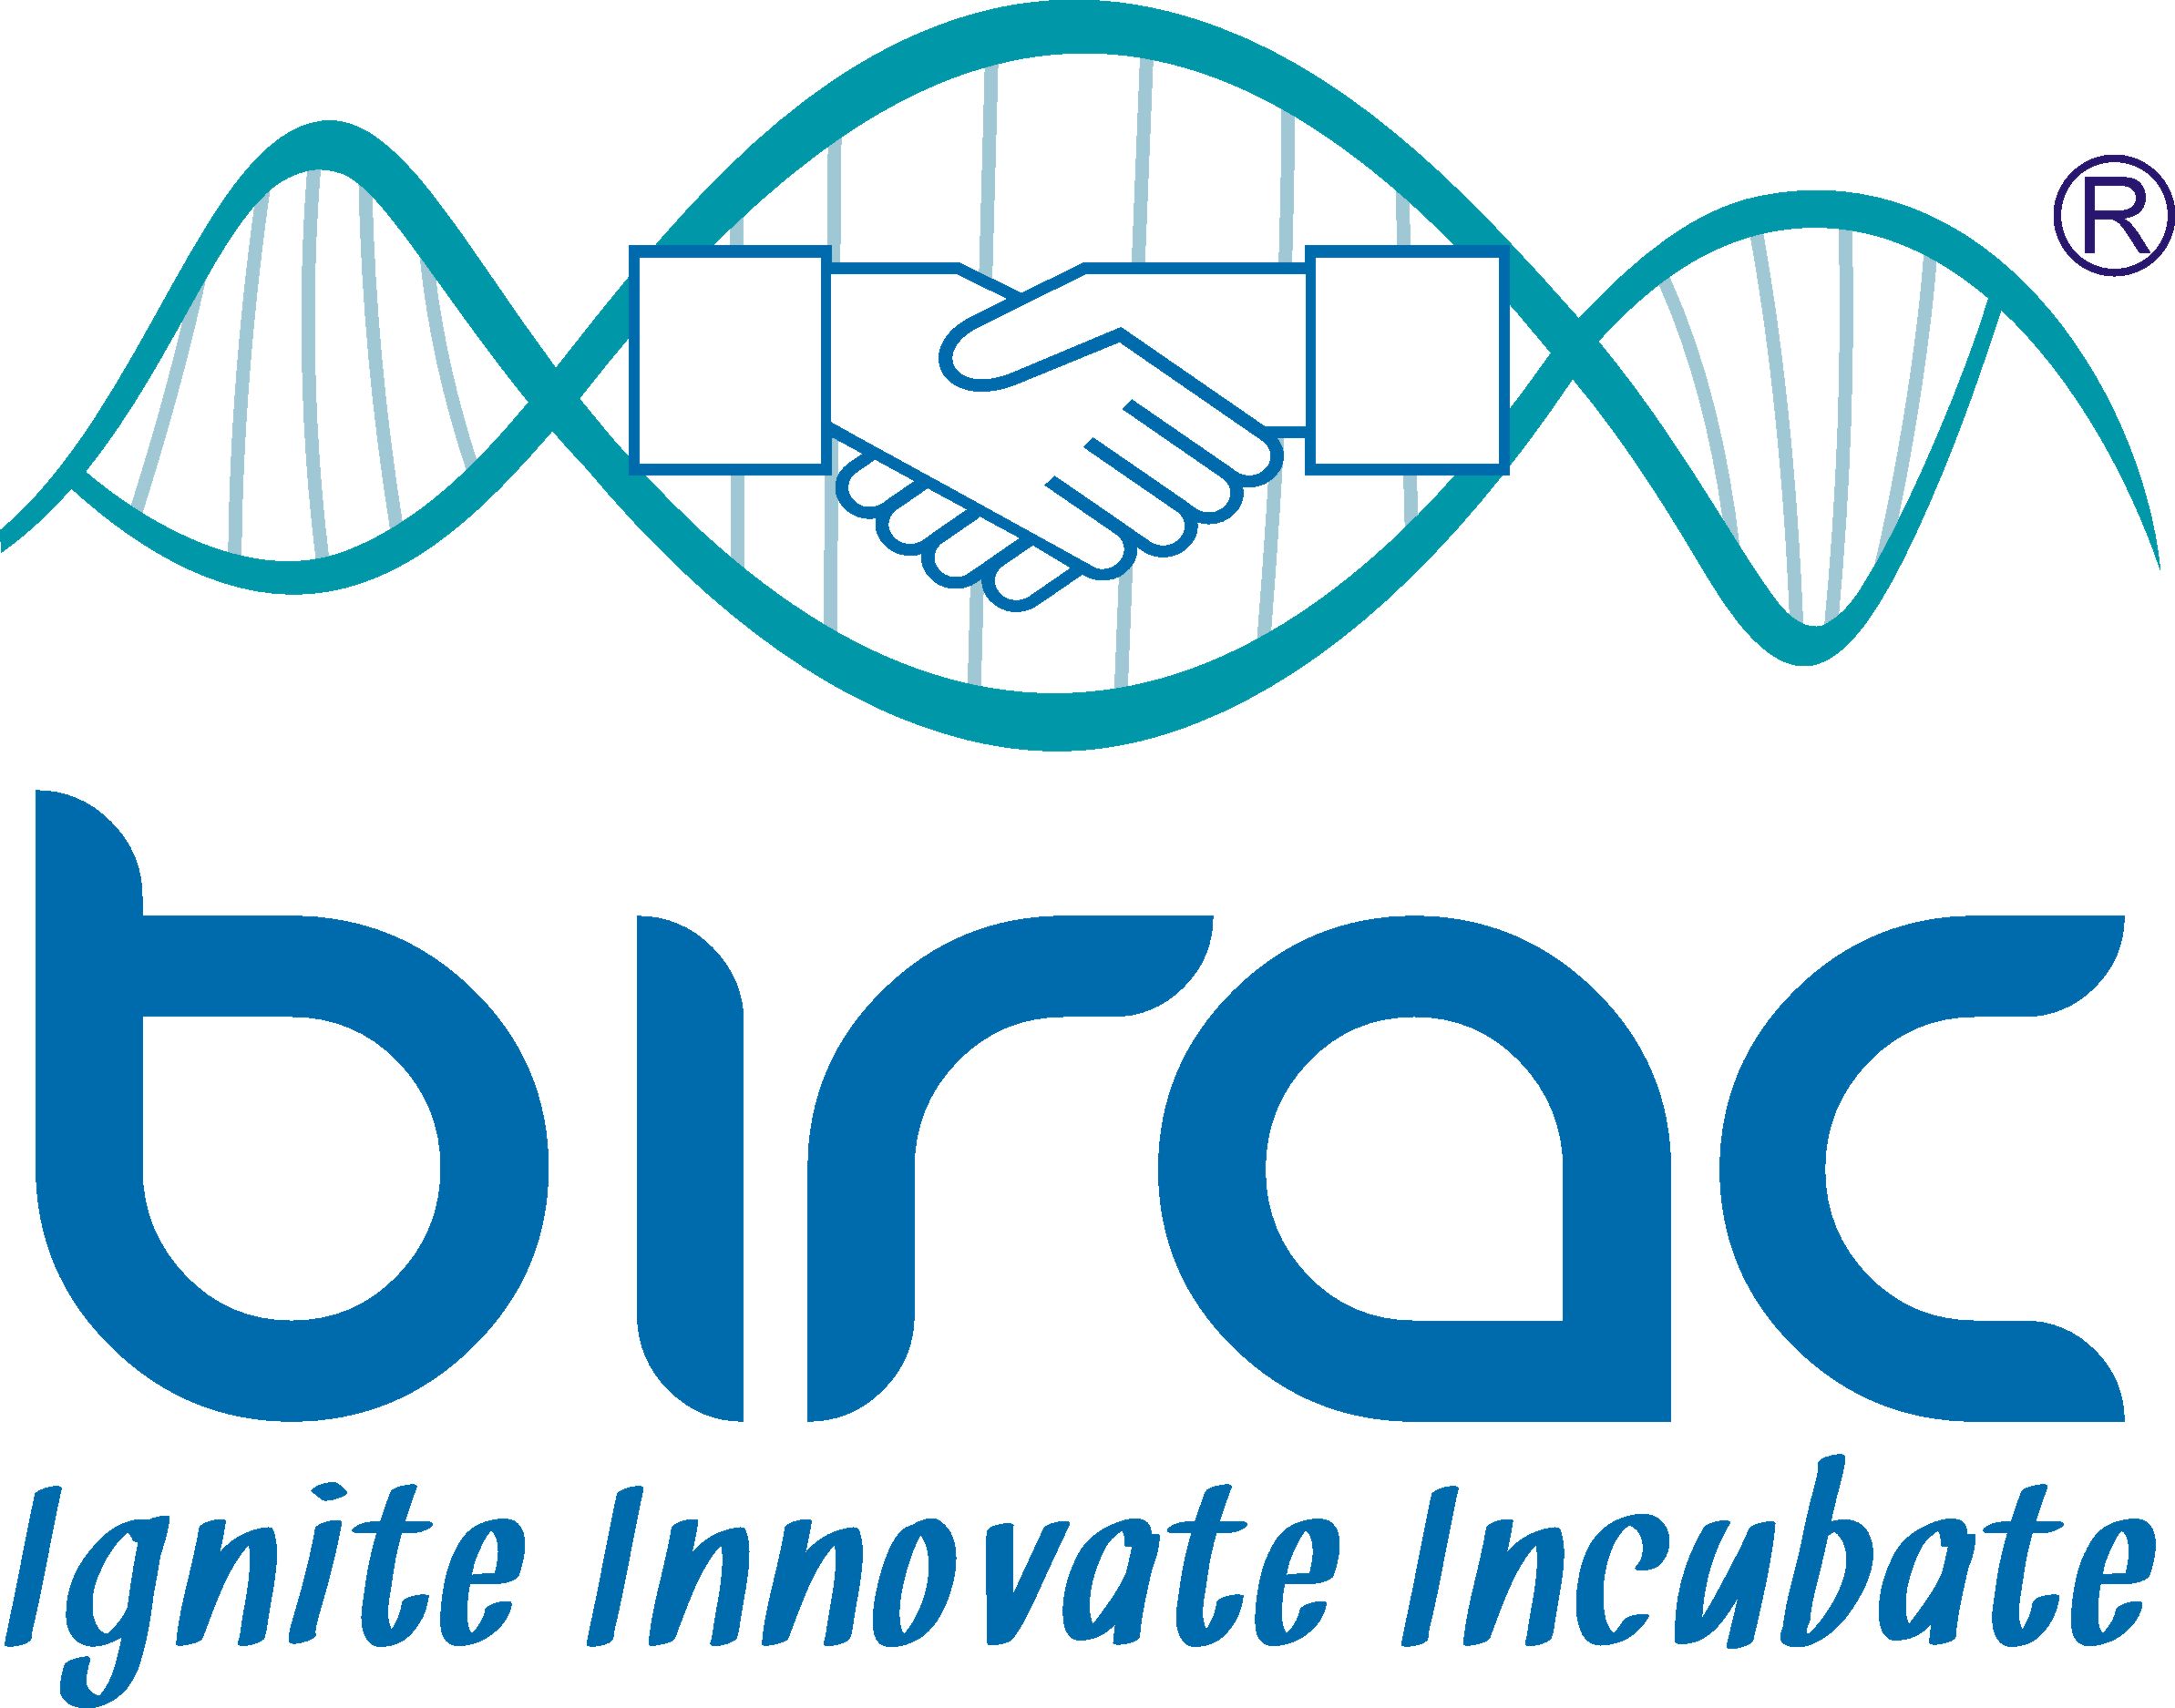 BIRAC Logo